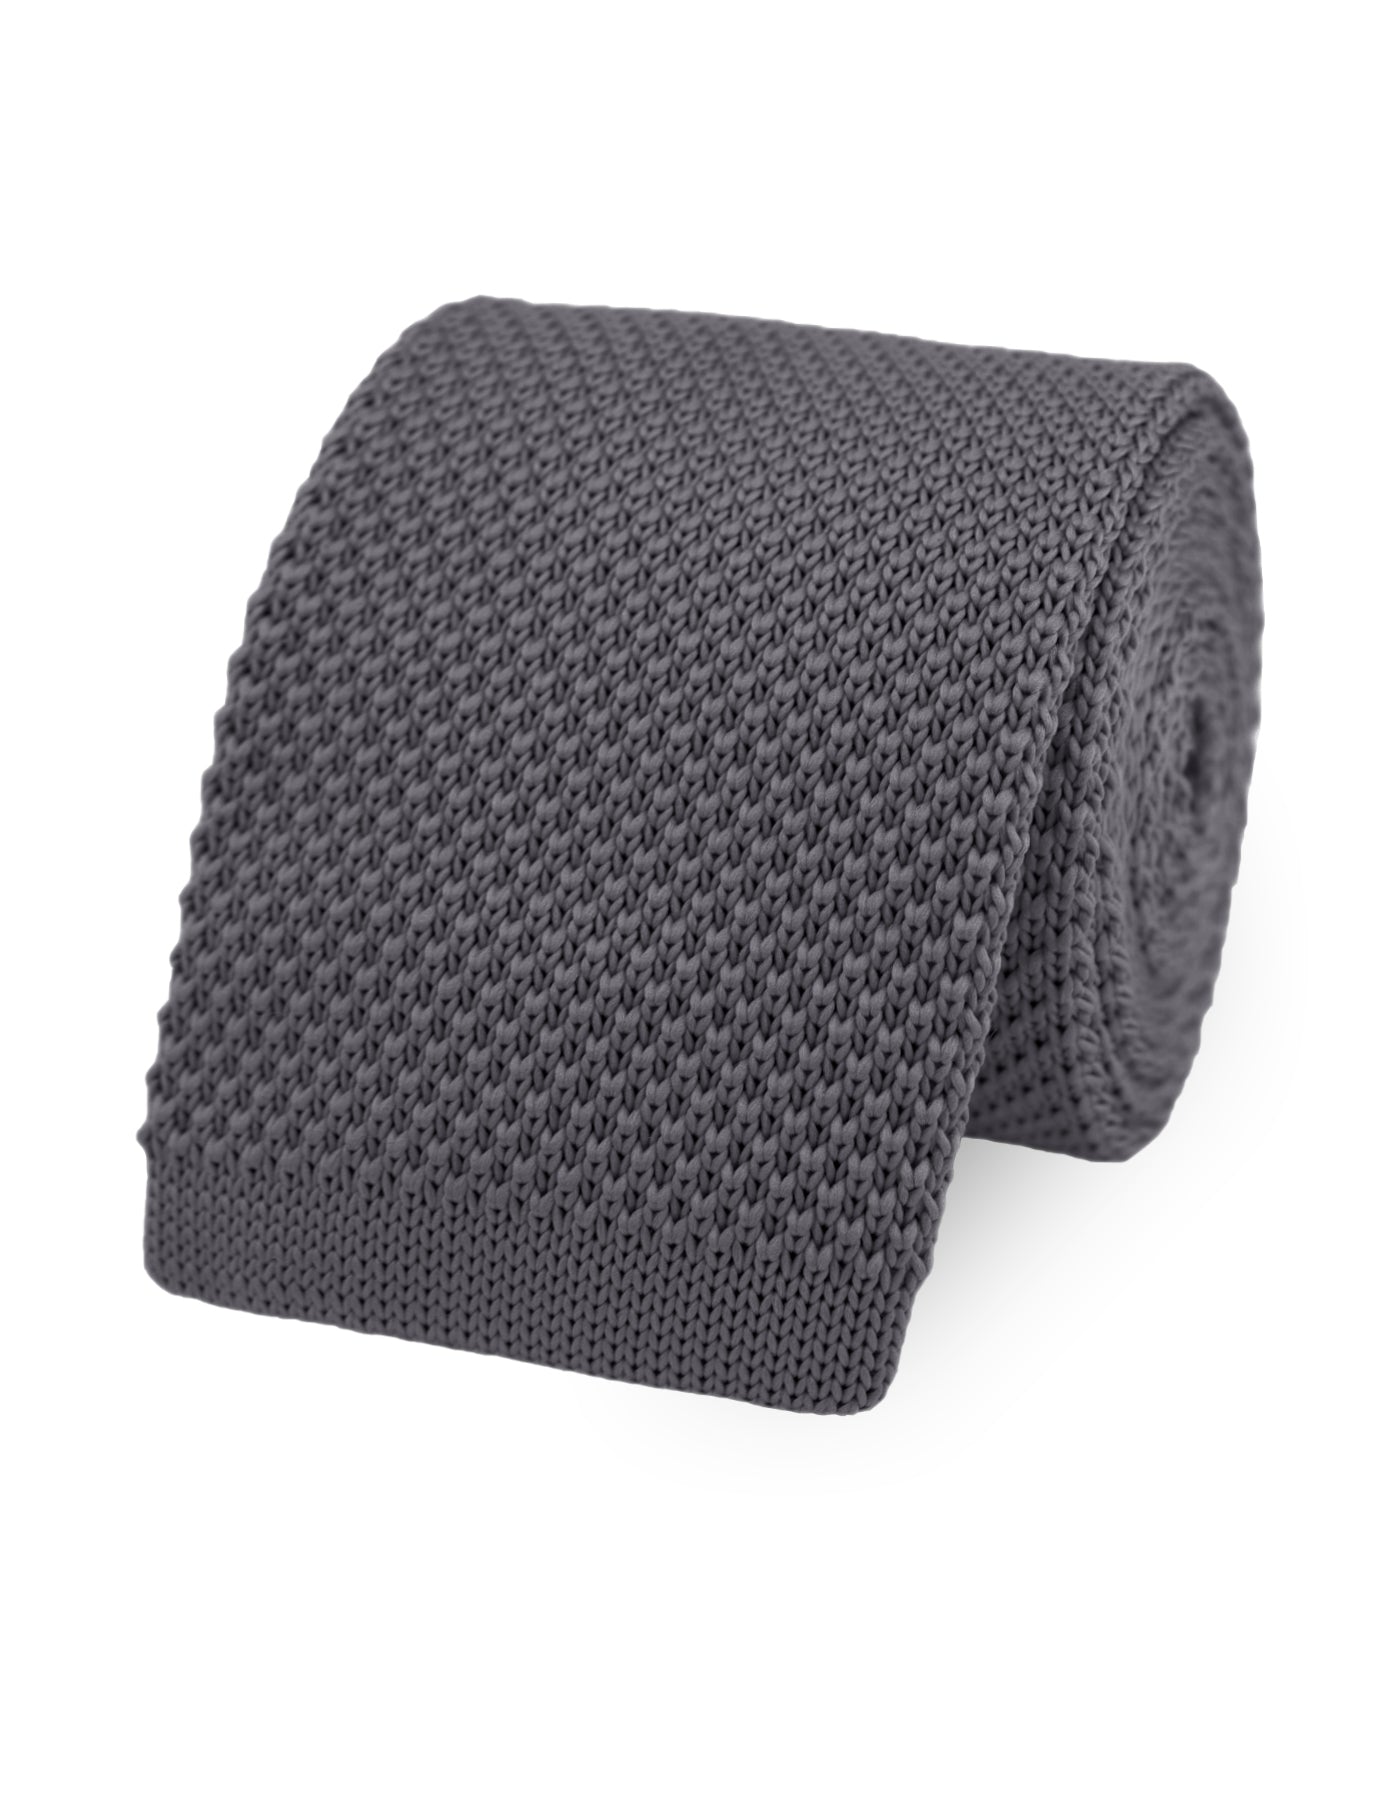 100% Polyester Knitted Pocket Square - Dark Grey